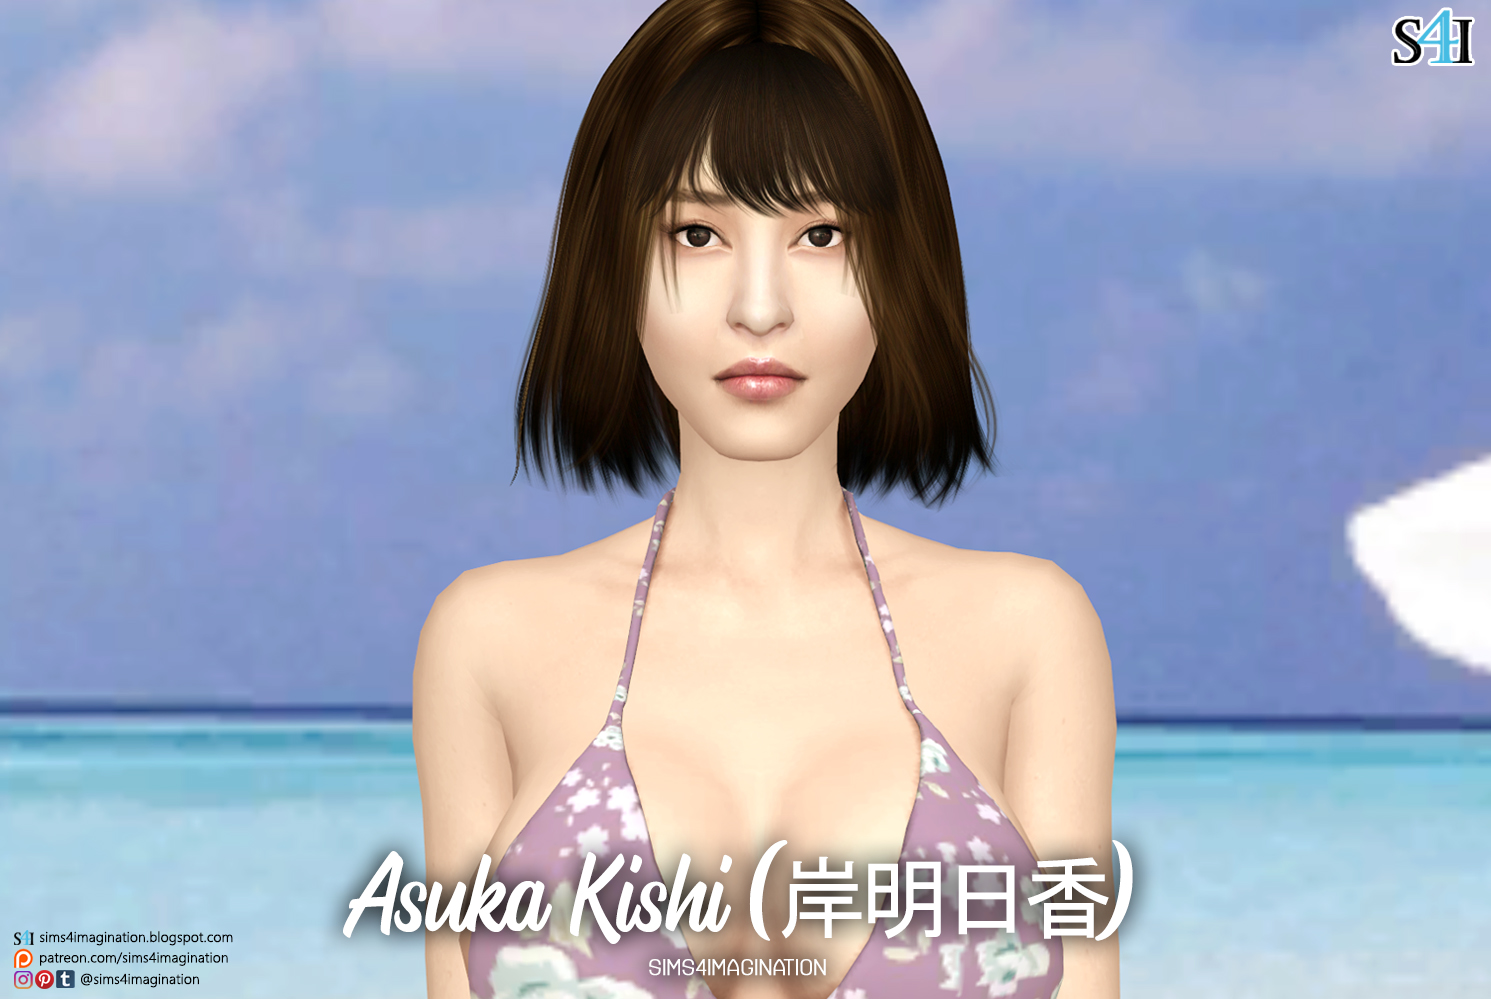 Sims 4 Cas Asuka Kishi 岸明日香 Imagination Sims 4 Cas